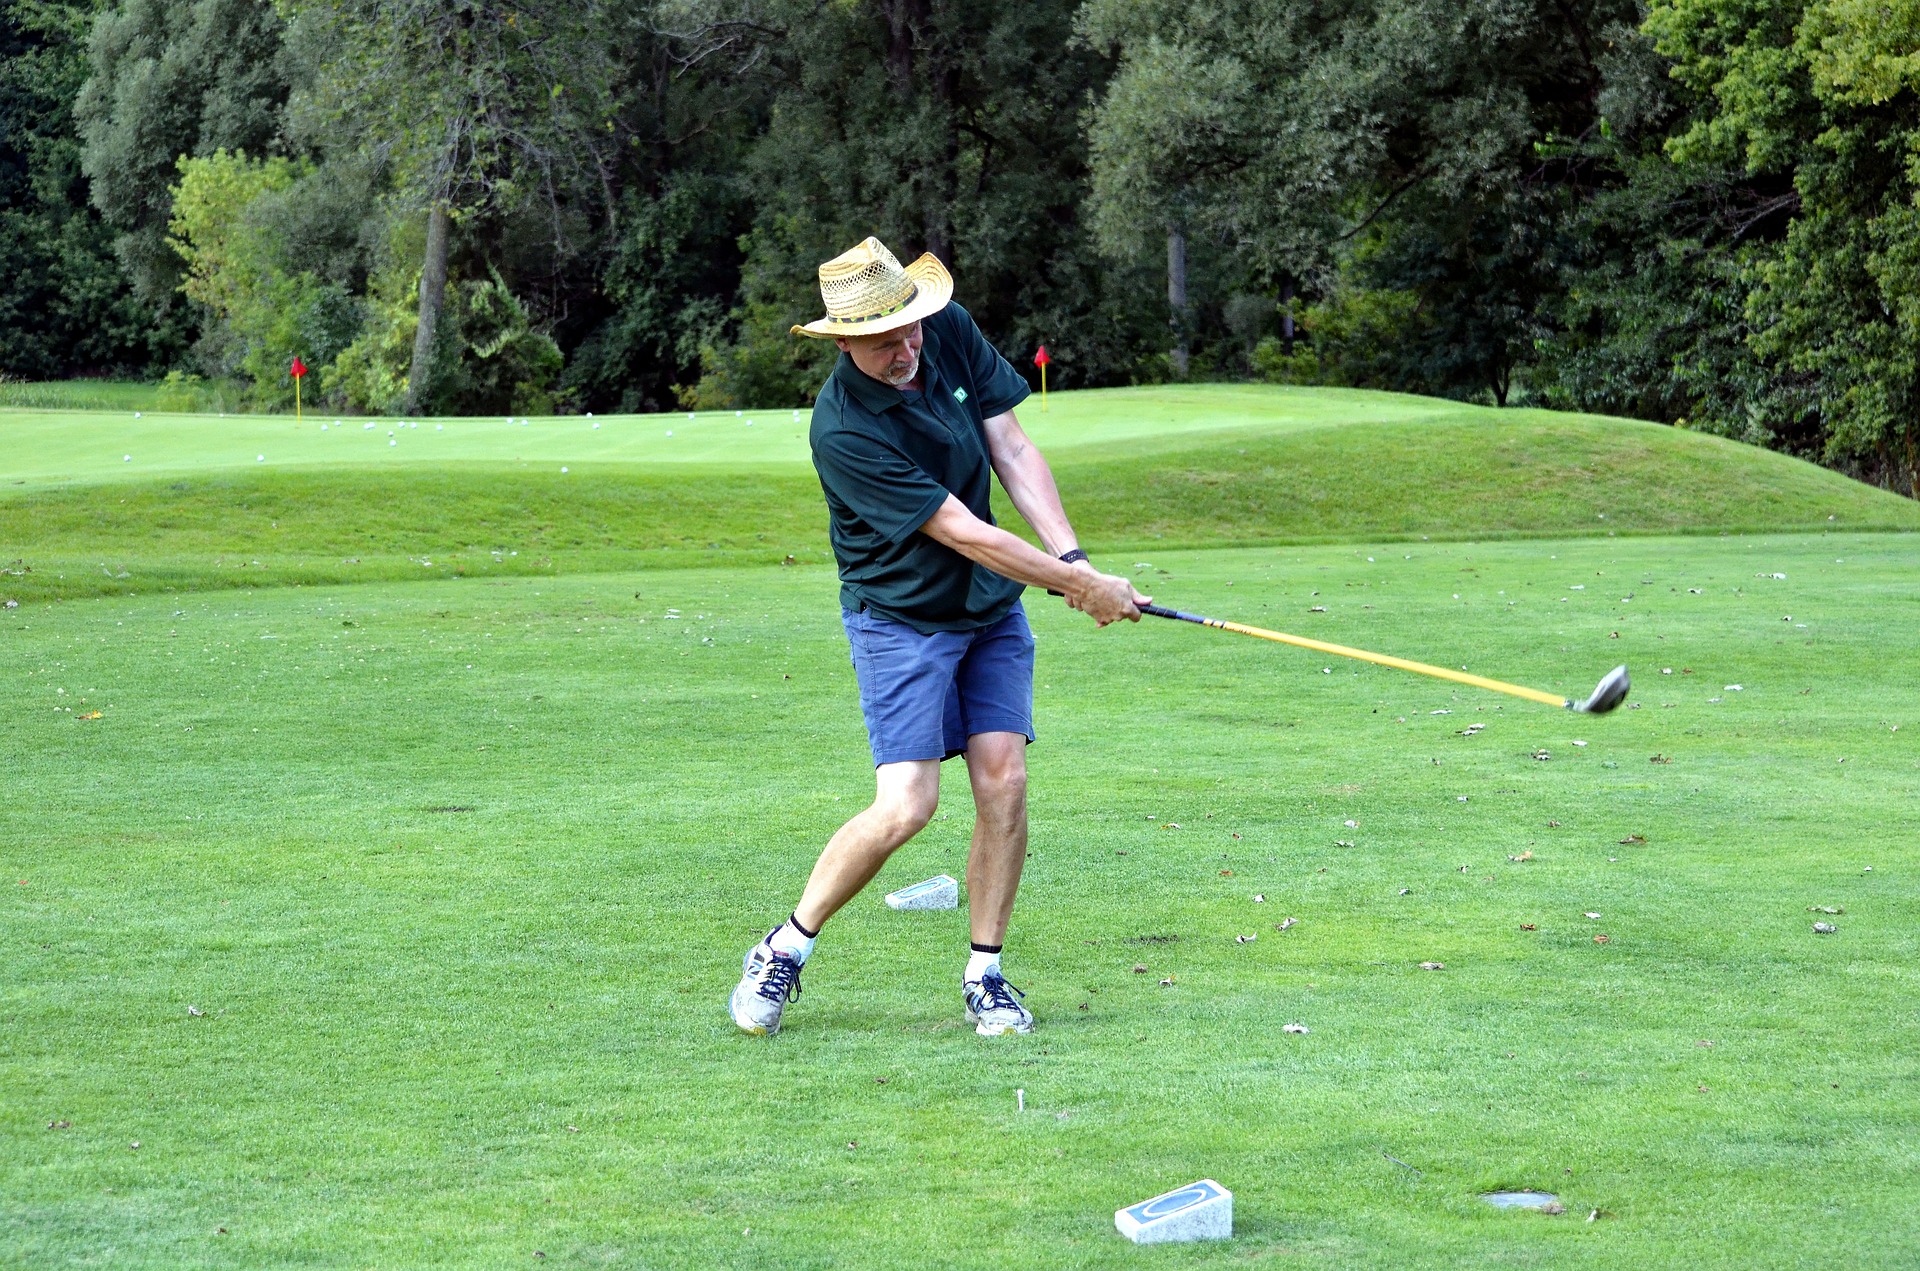 Golf Old Man golfer golfing